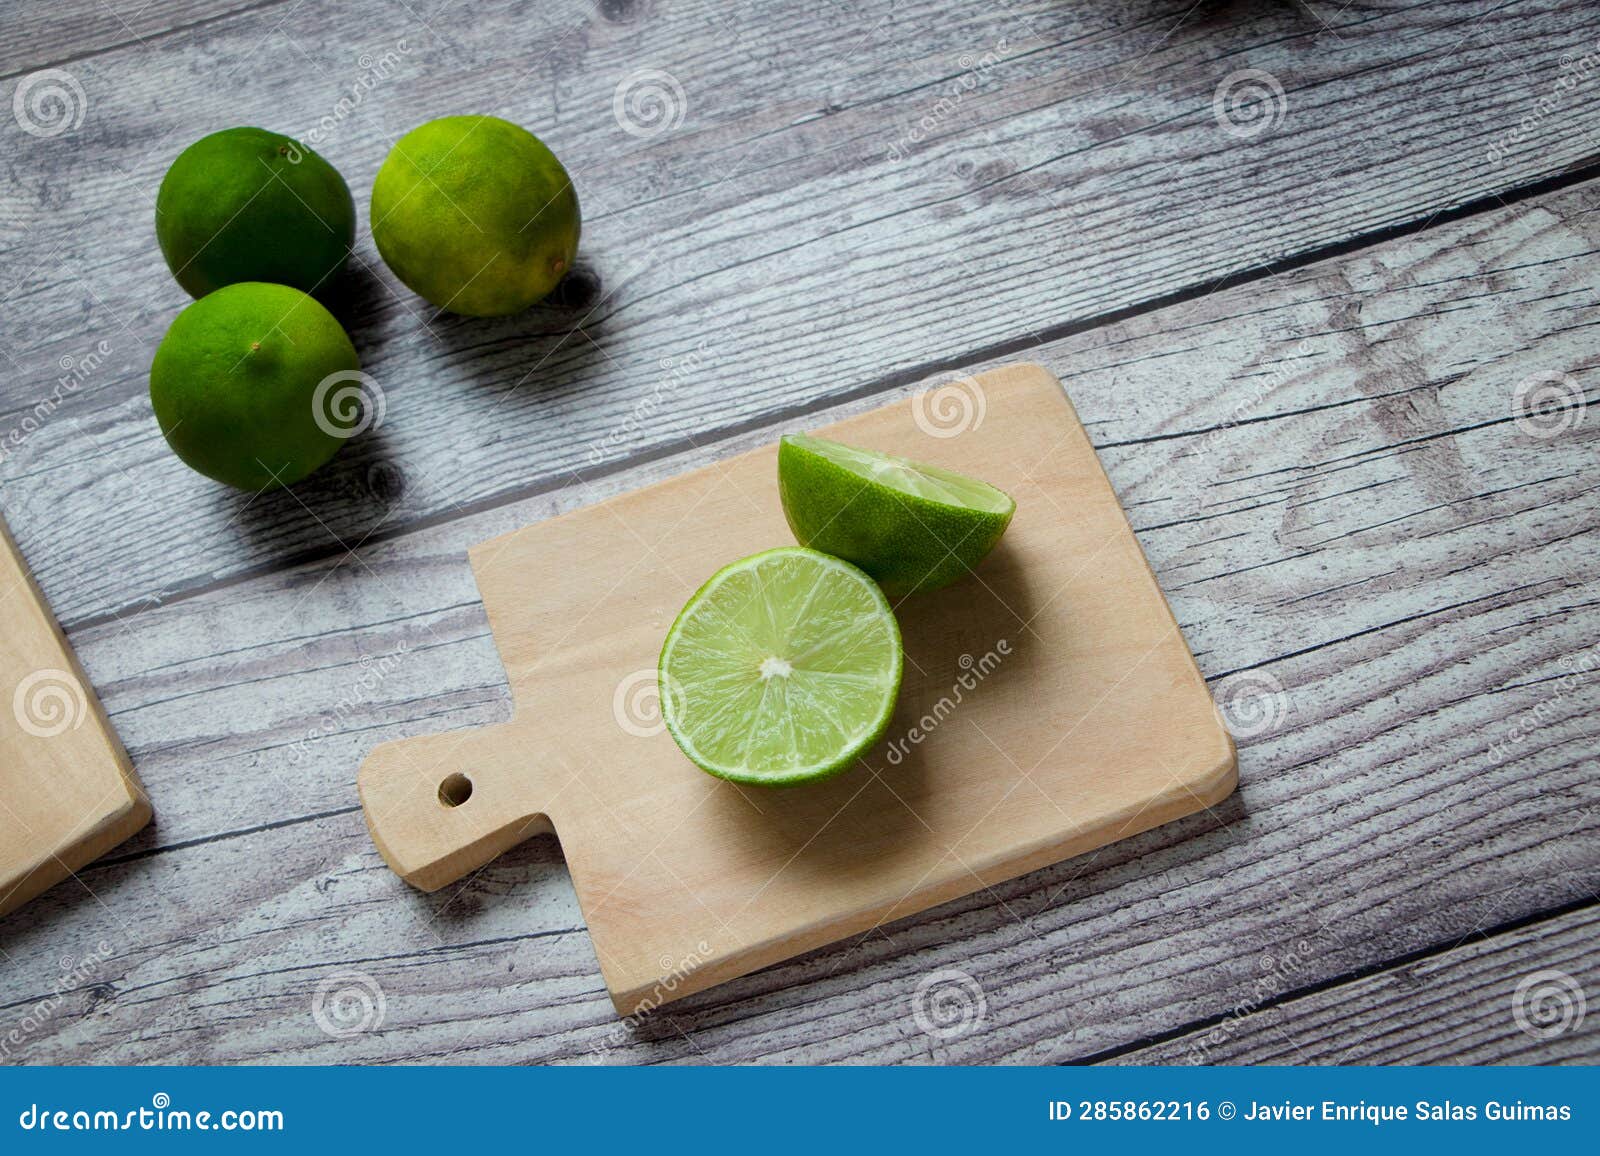 green lemons on a chopping board